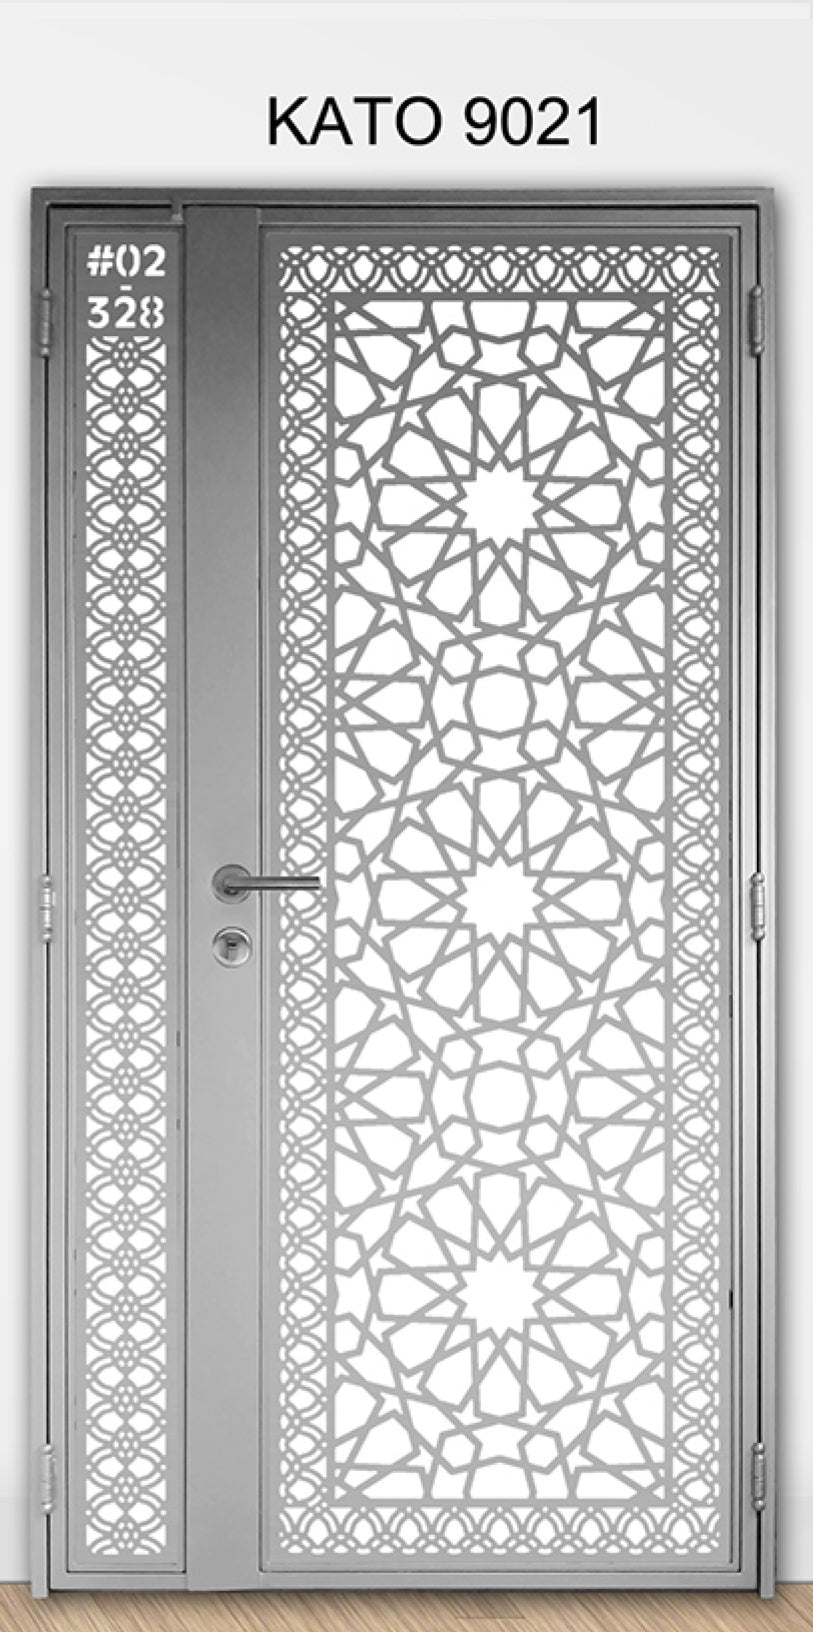 Customized laser cut kato gate 9021 (Islamic Design Gate Series)